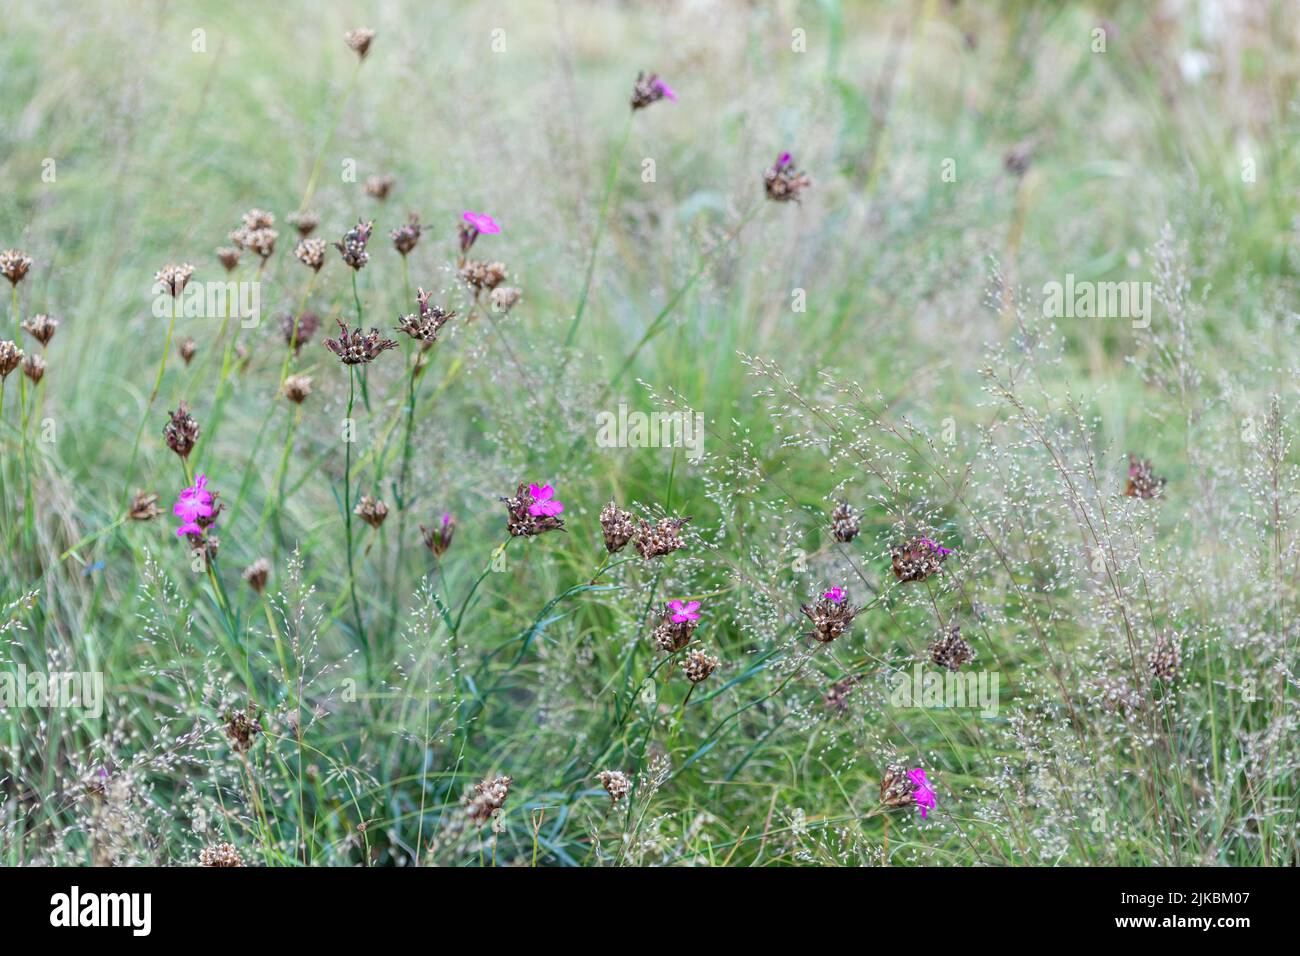 Dianthus carthusianorum (German pink) amongst grasses Stock Photo